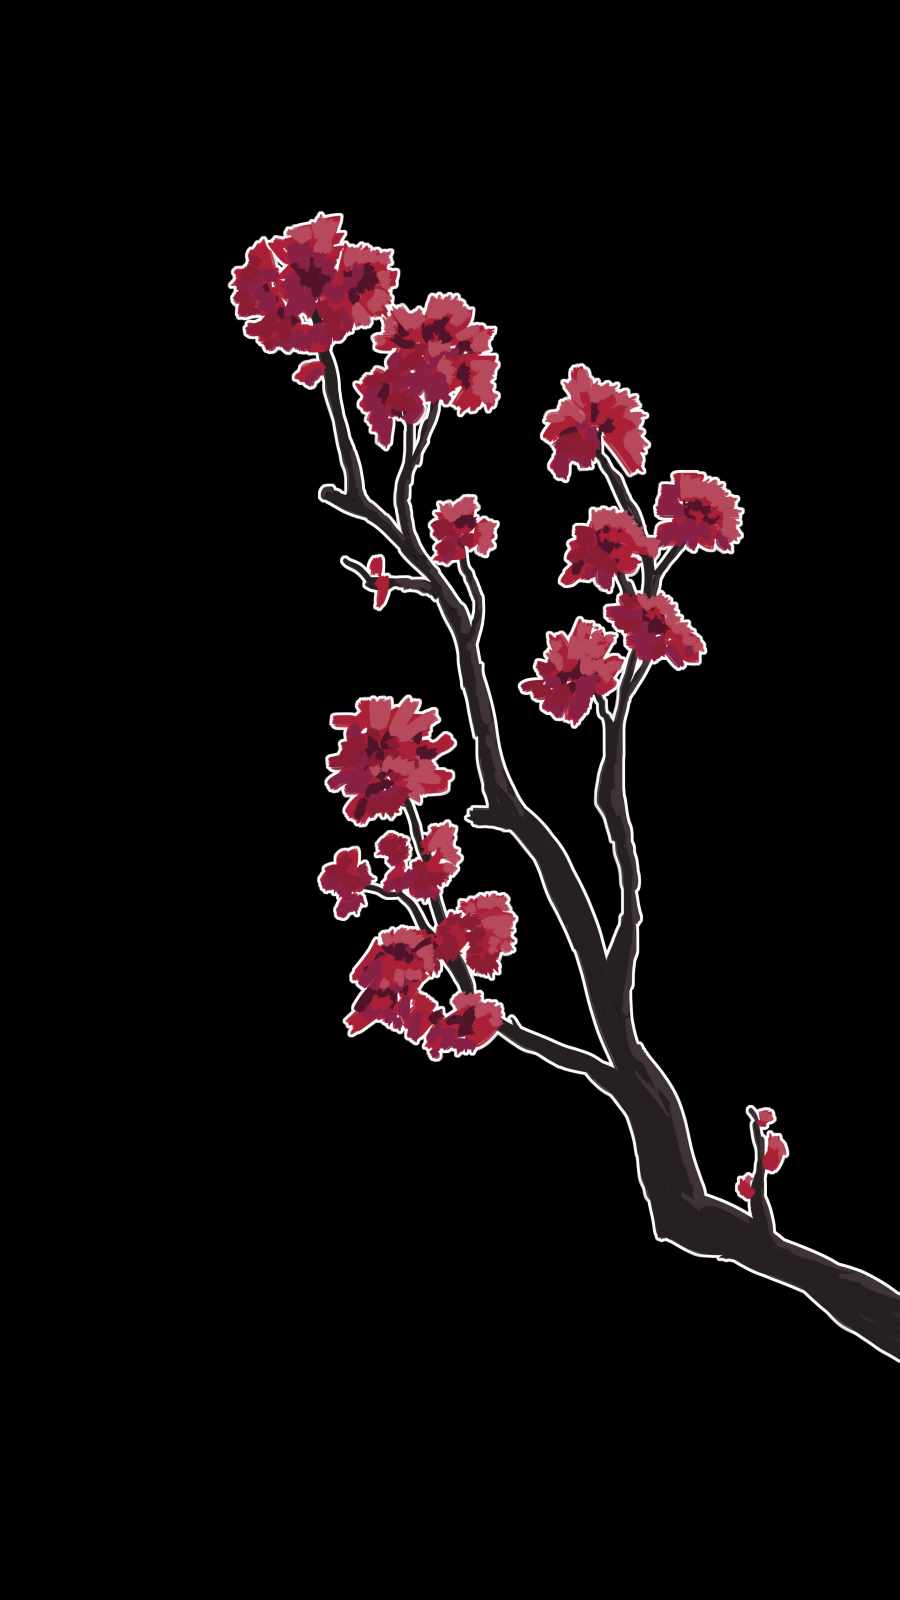 Flower Branch iPhone Wallpaper